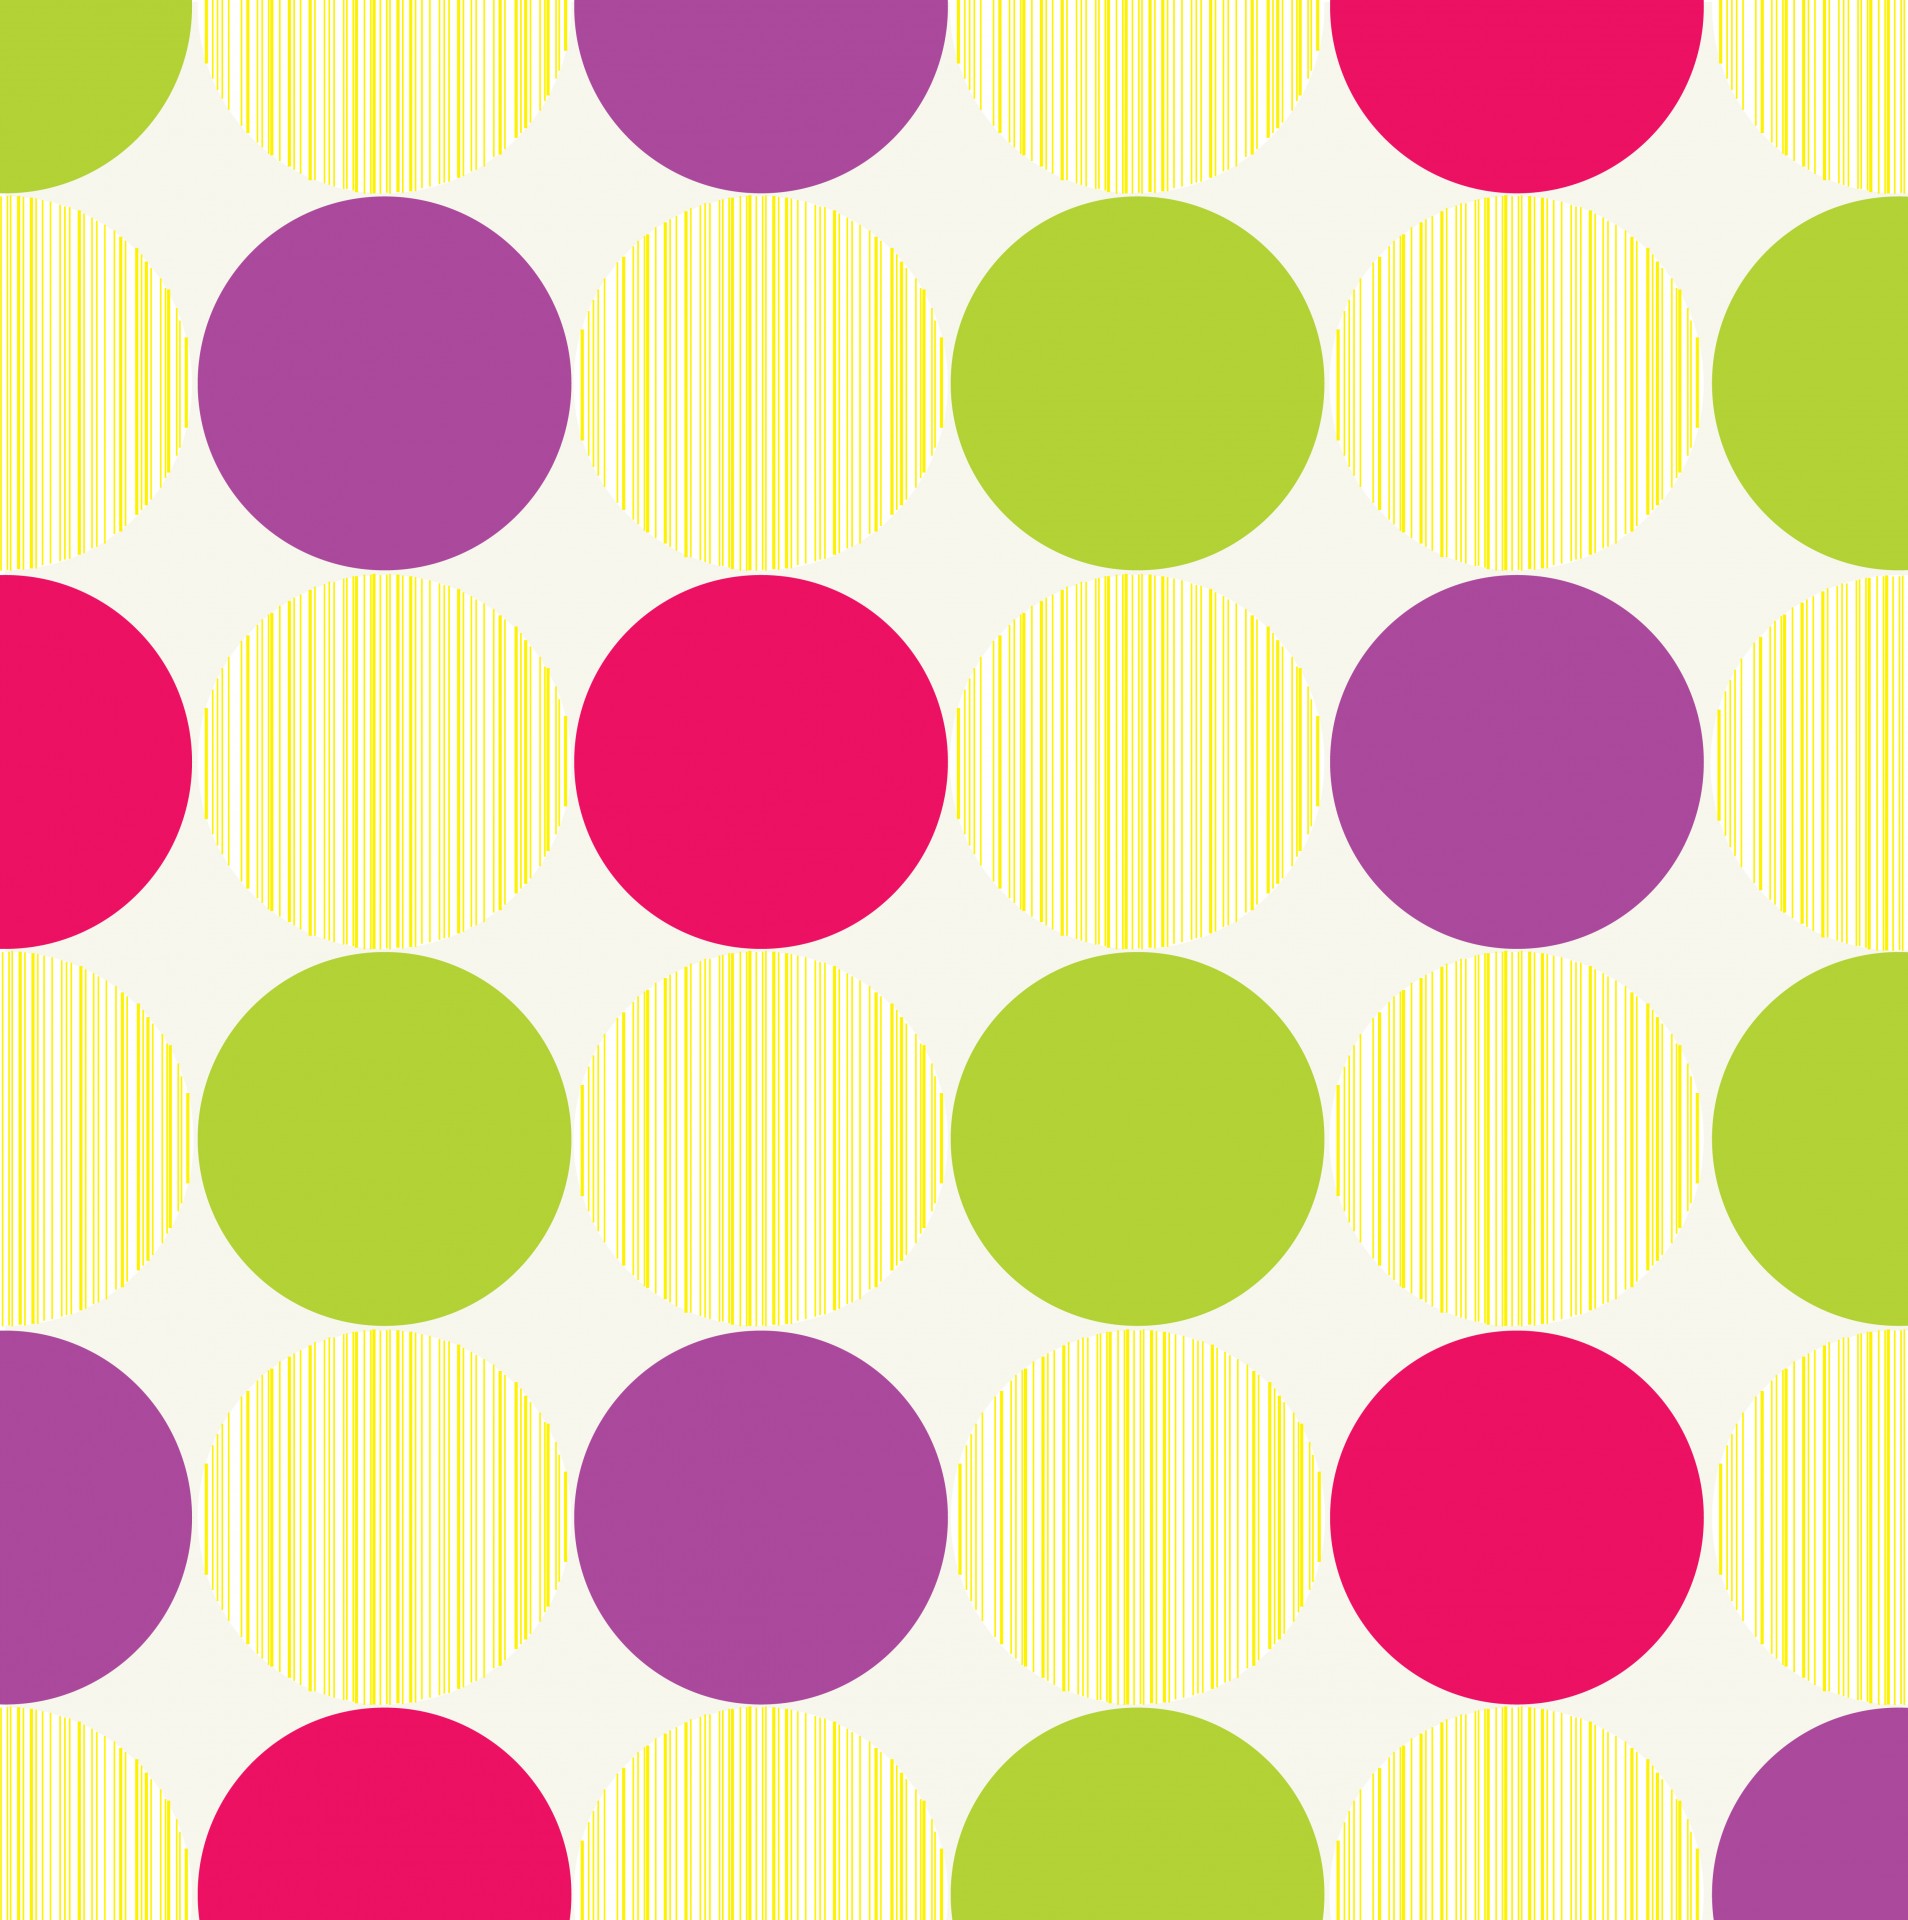 Beautiful, bright colorful polka dots wallpaper background